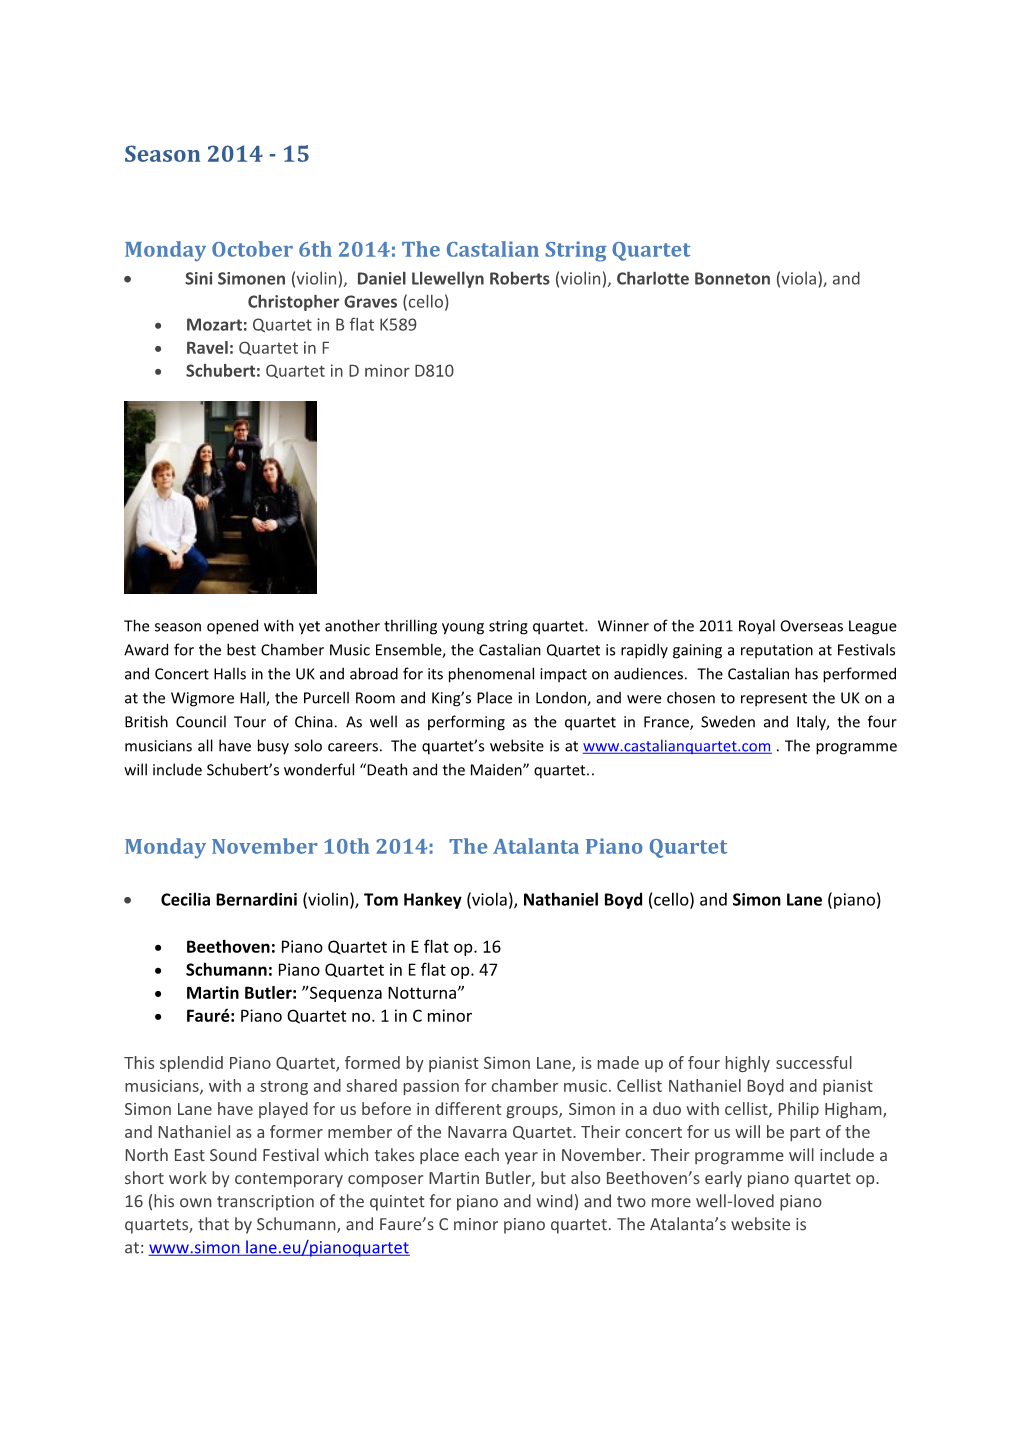 Monday October 6Th 2014: the Castalian String Quartet